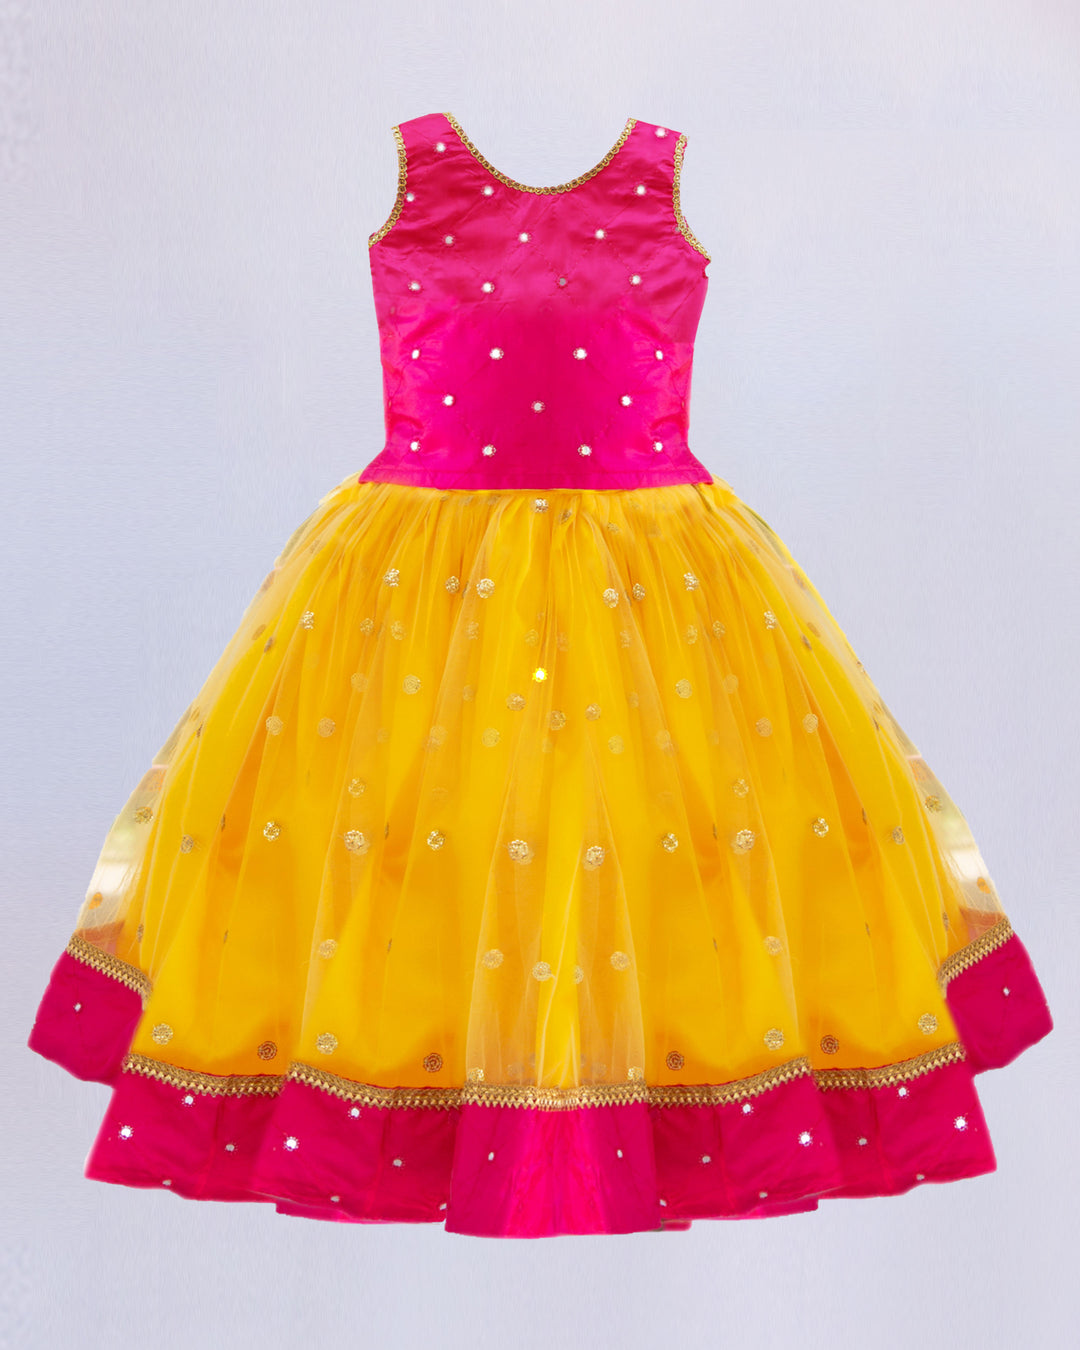 yellow and pink mirror works sequins baby girls full length lehenga choli stanwells kids pattu pavadai skirt & blouse gagra choli